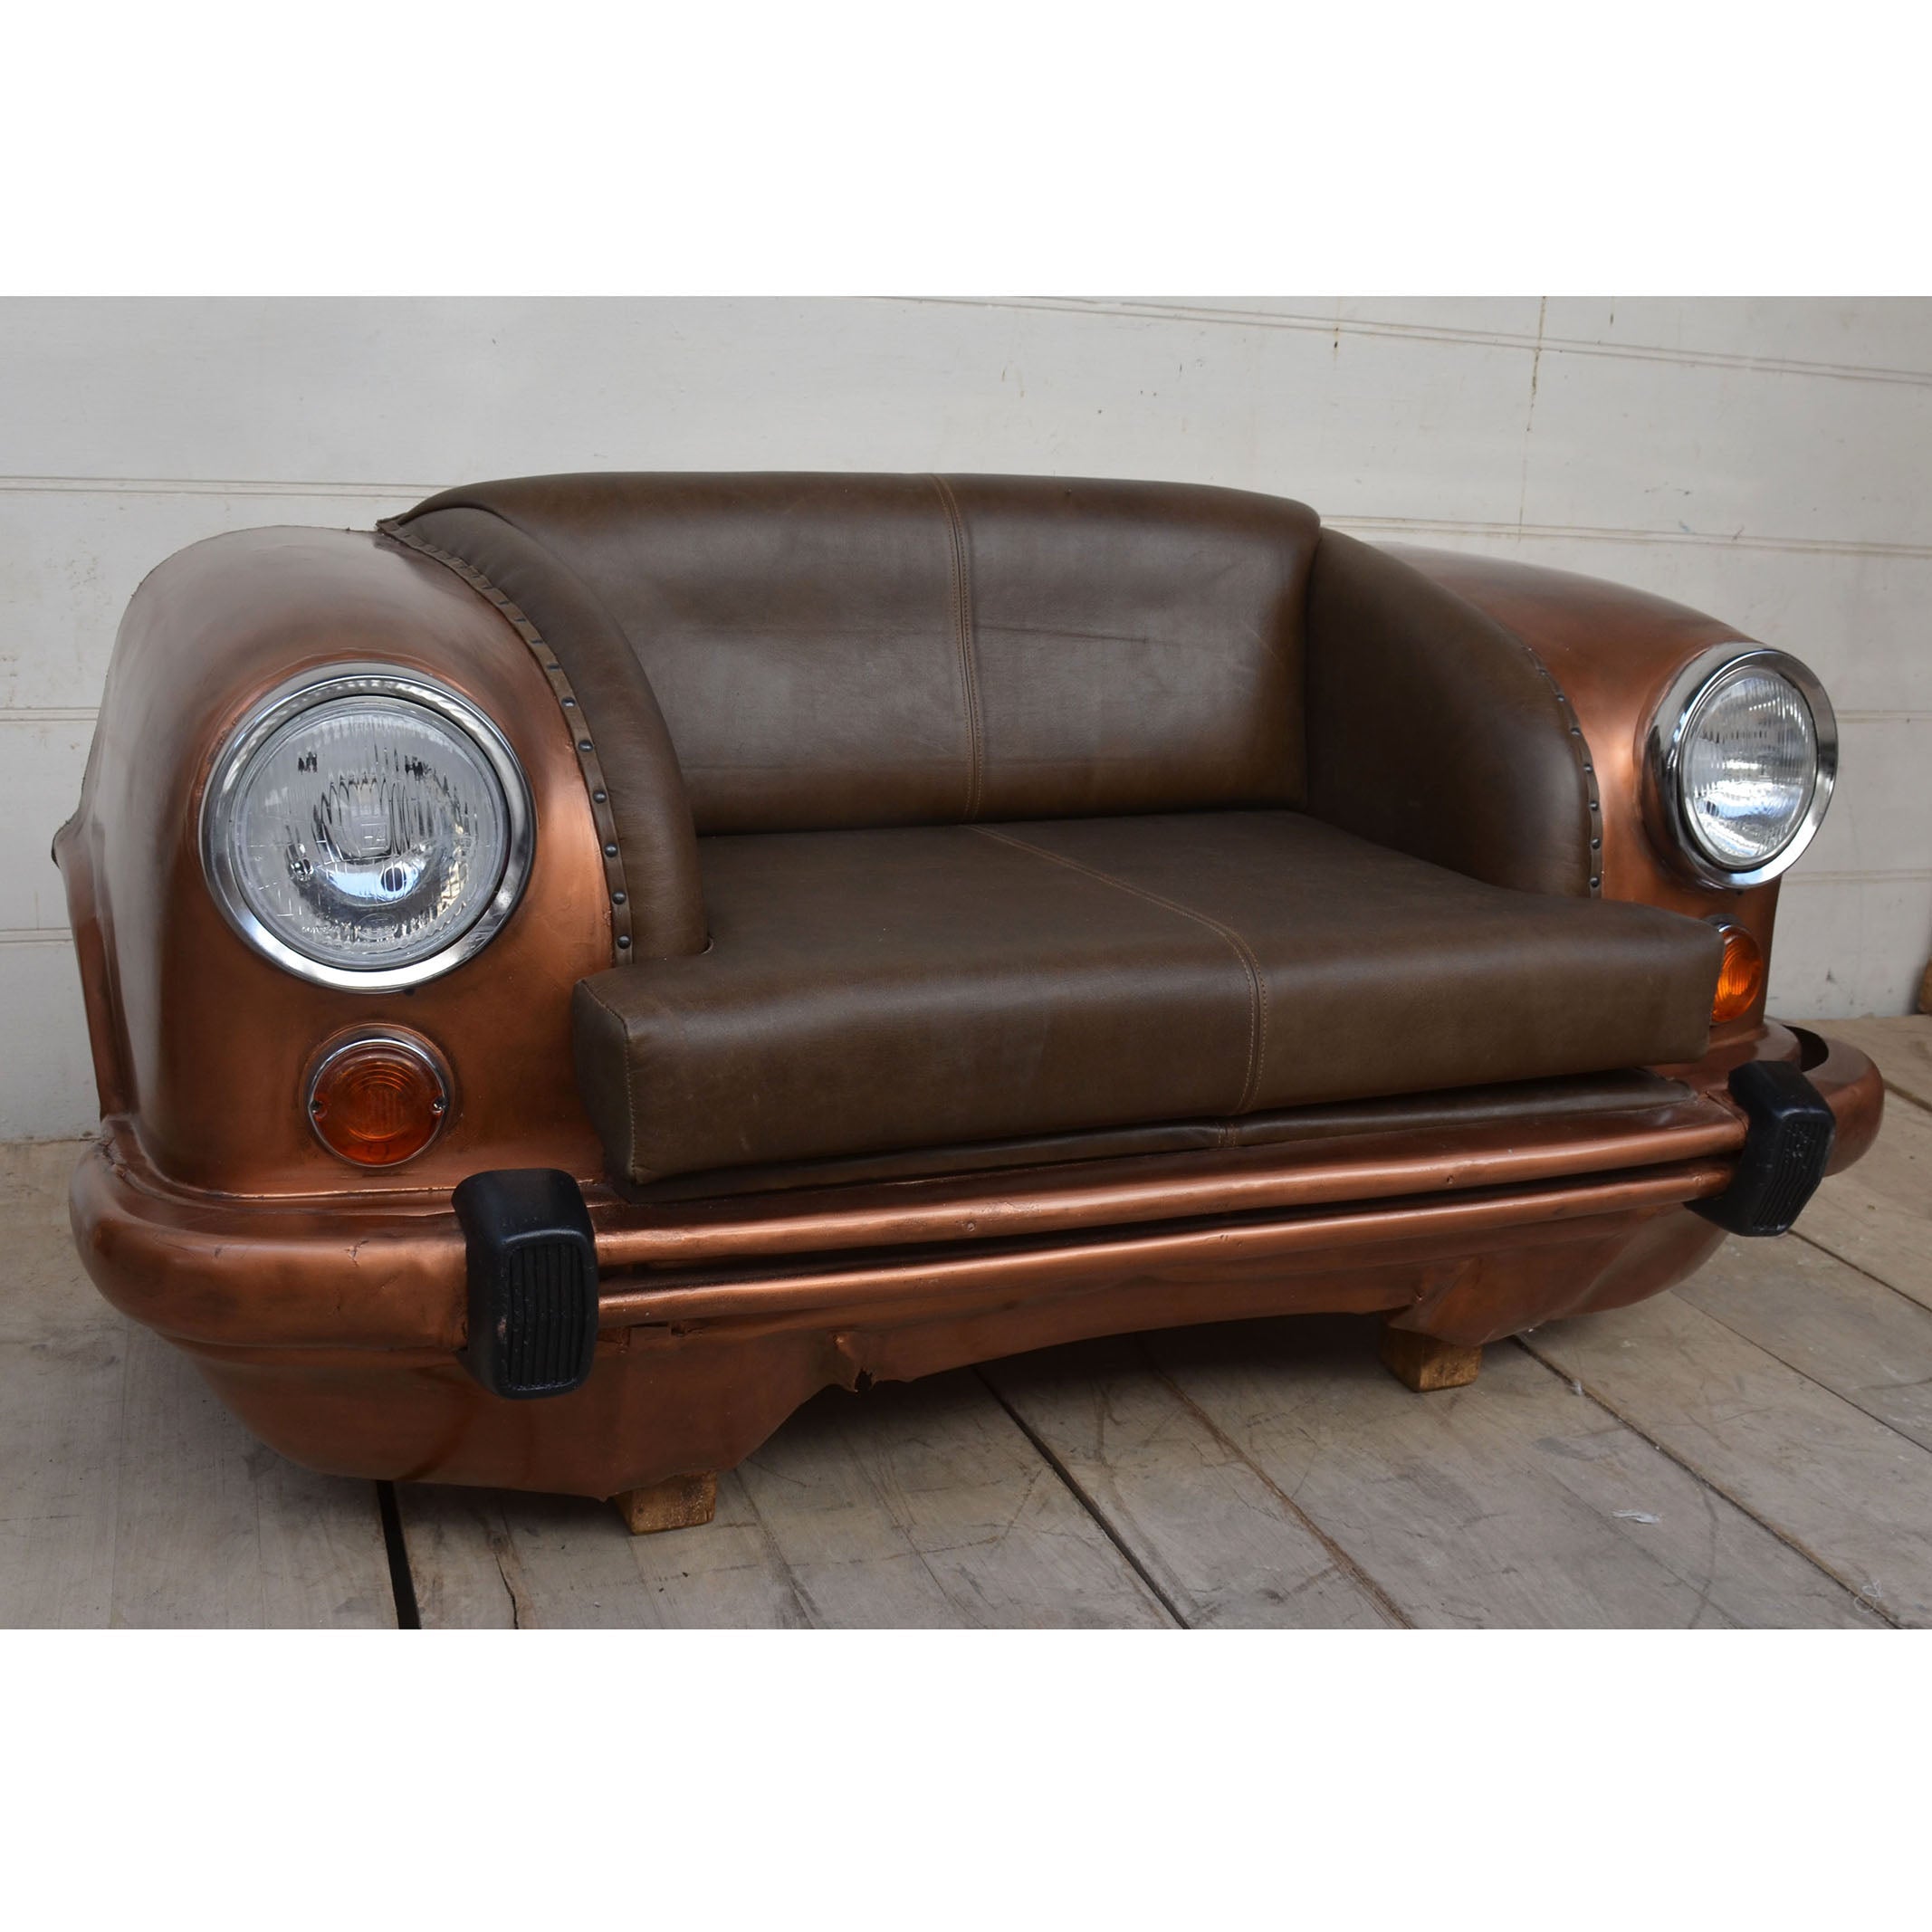 Fender Vintage Car Sofa